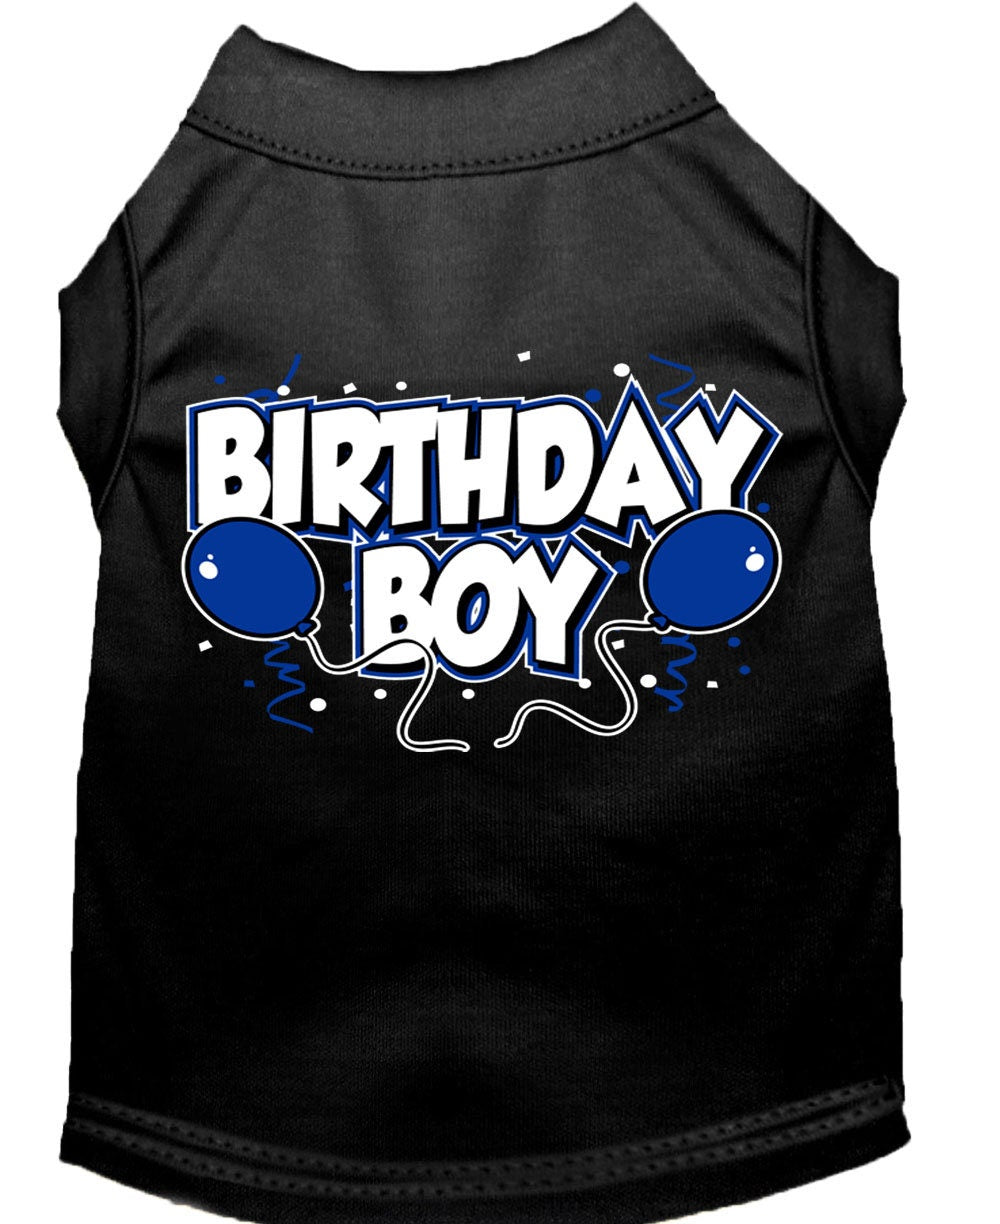 Pet Dog & Cat Shirt Screen Printed, "Birthday Boy"